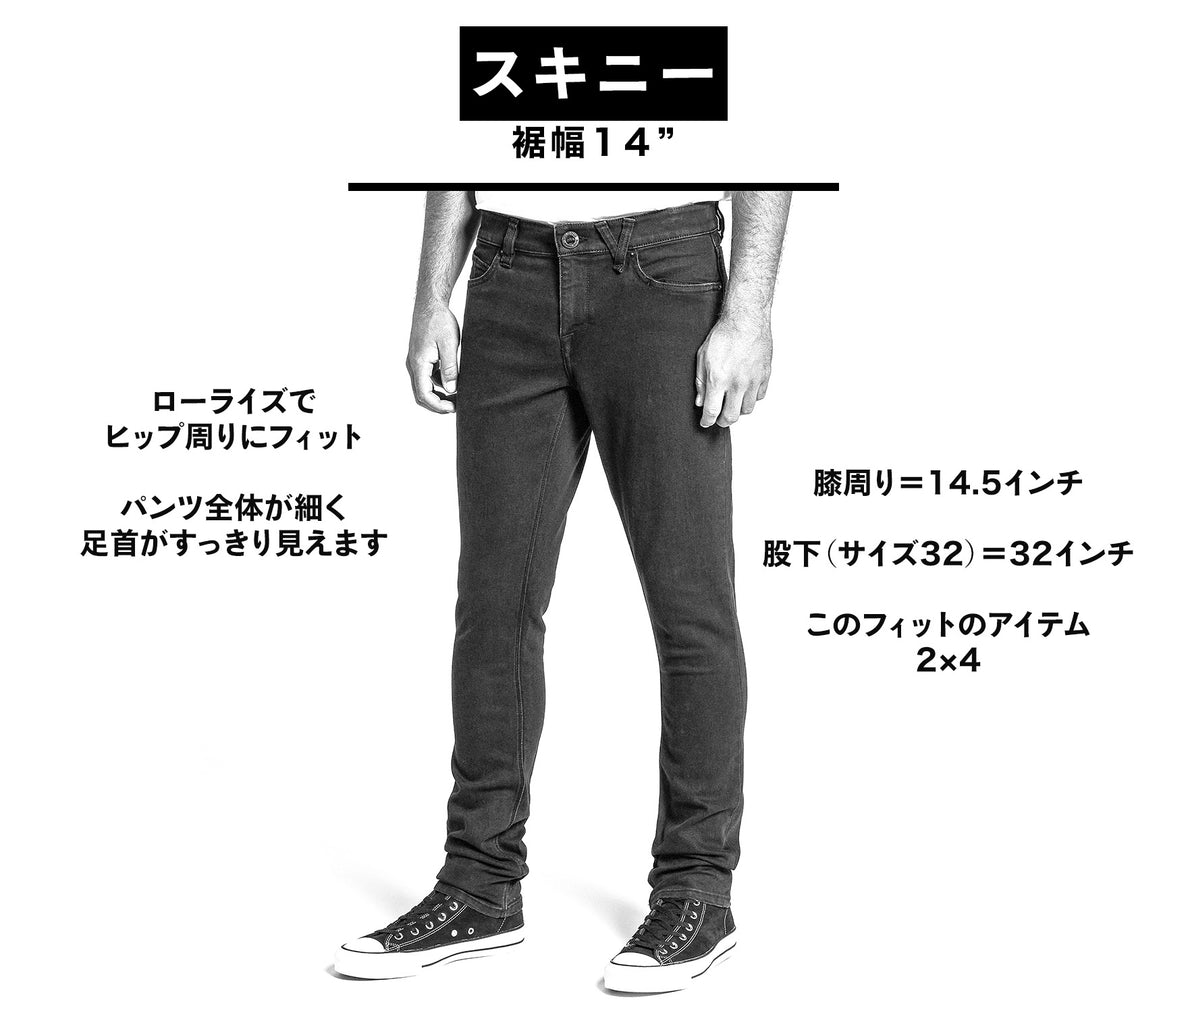 2X4 Skinny Fit Jeans - Rinse